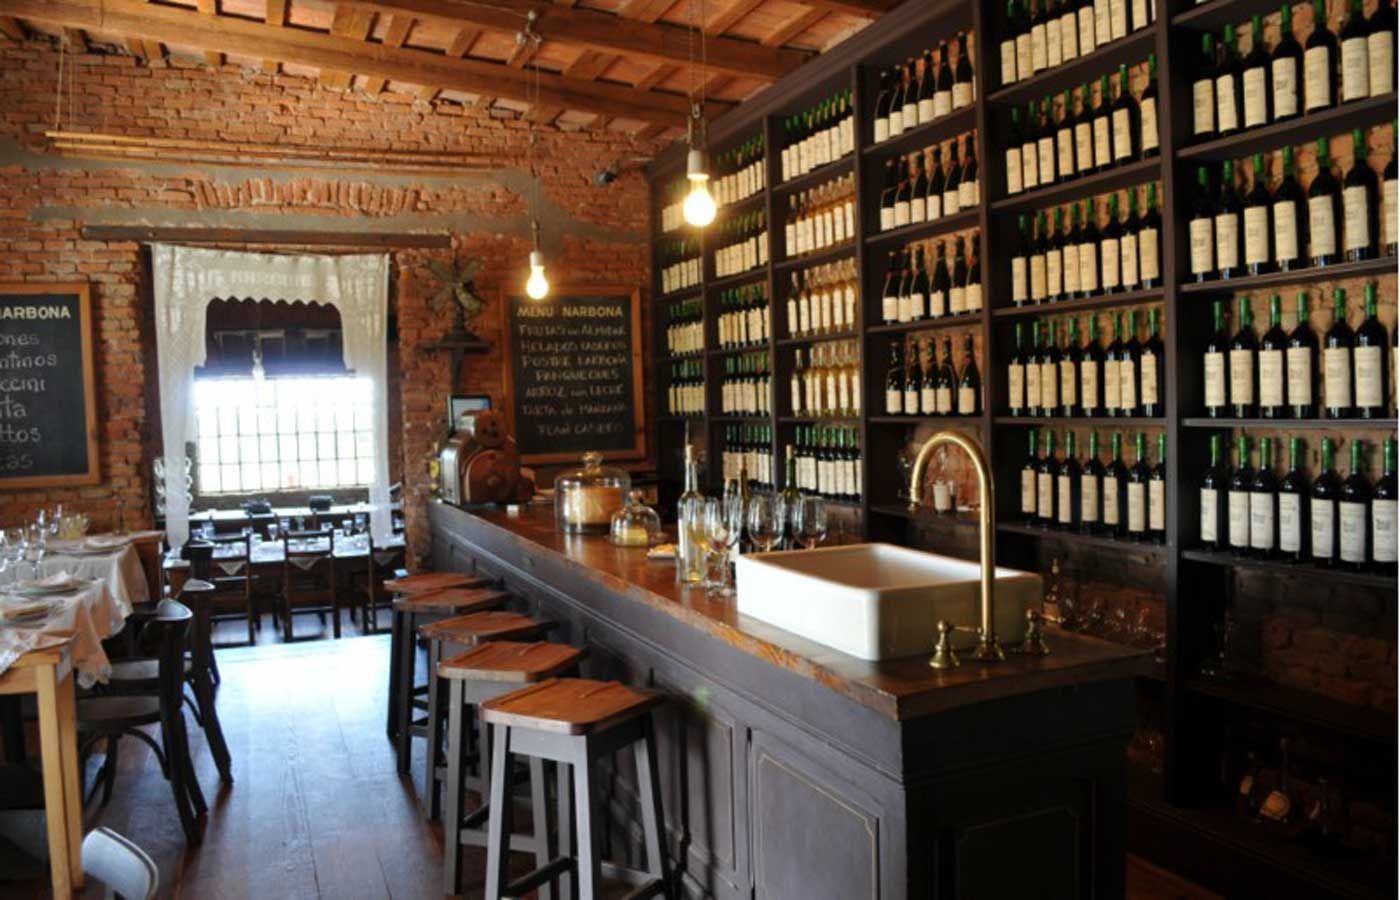 Narbona Wine Lodge, Uruguay